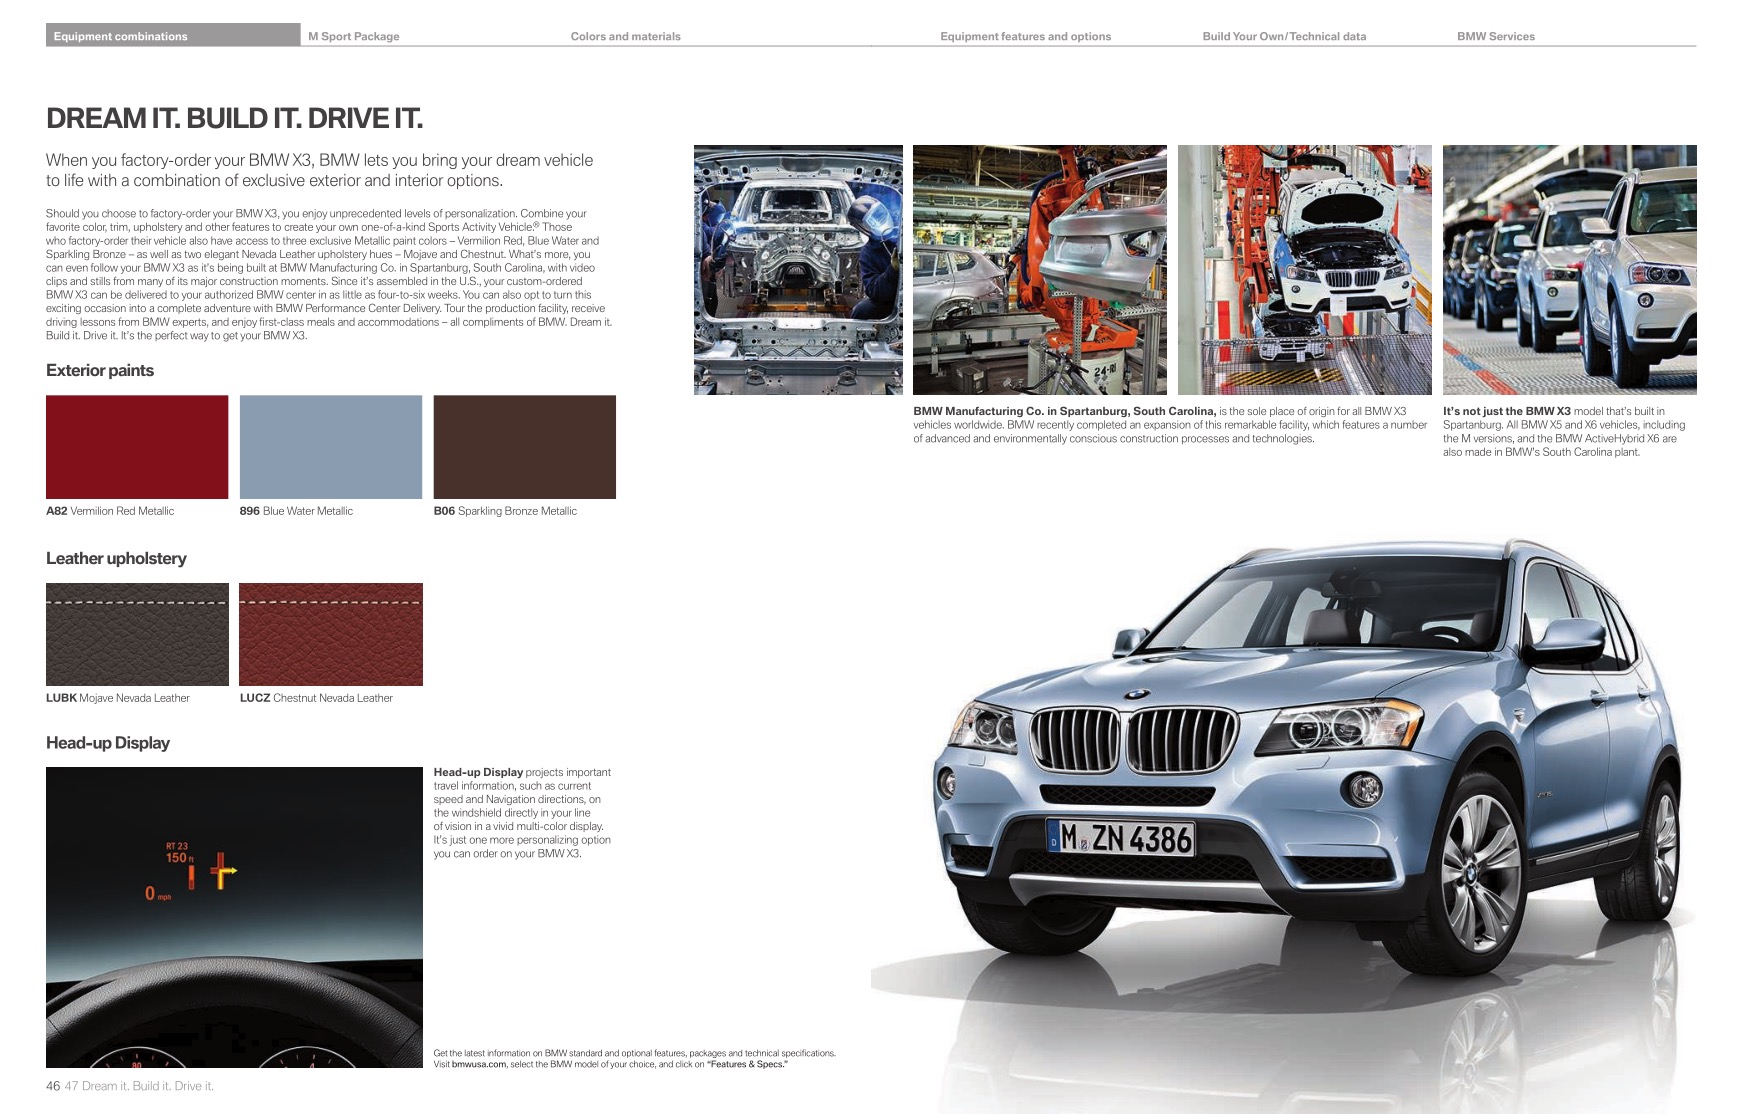 2013 BMW X3 Brochure Page 31